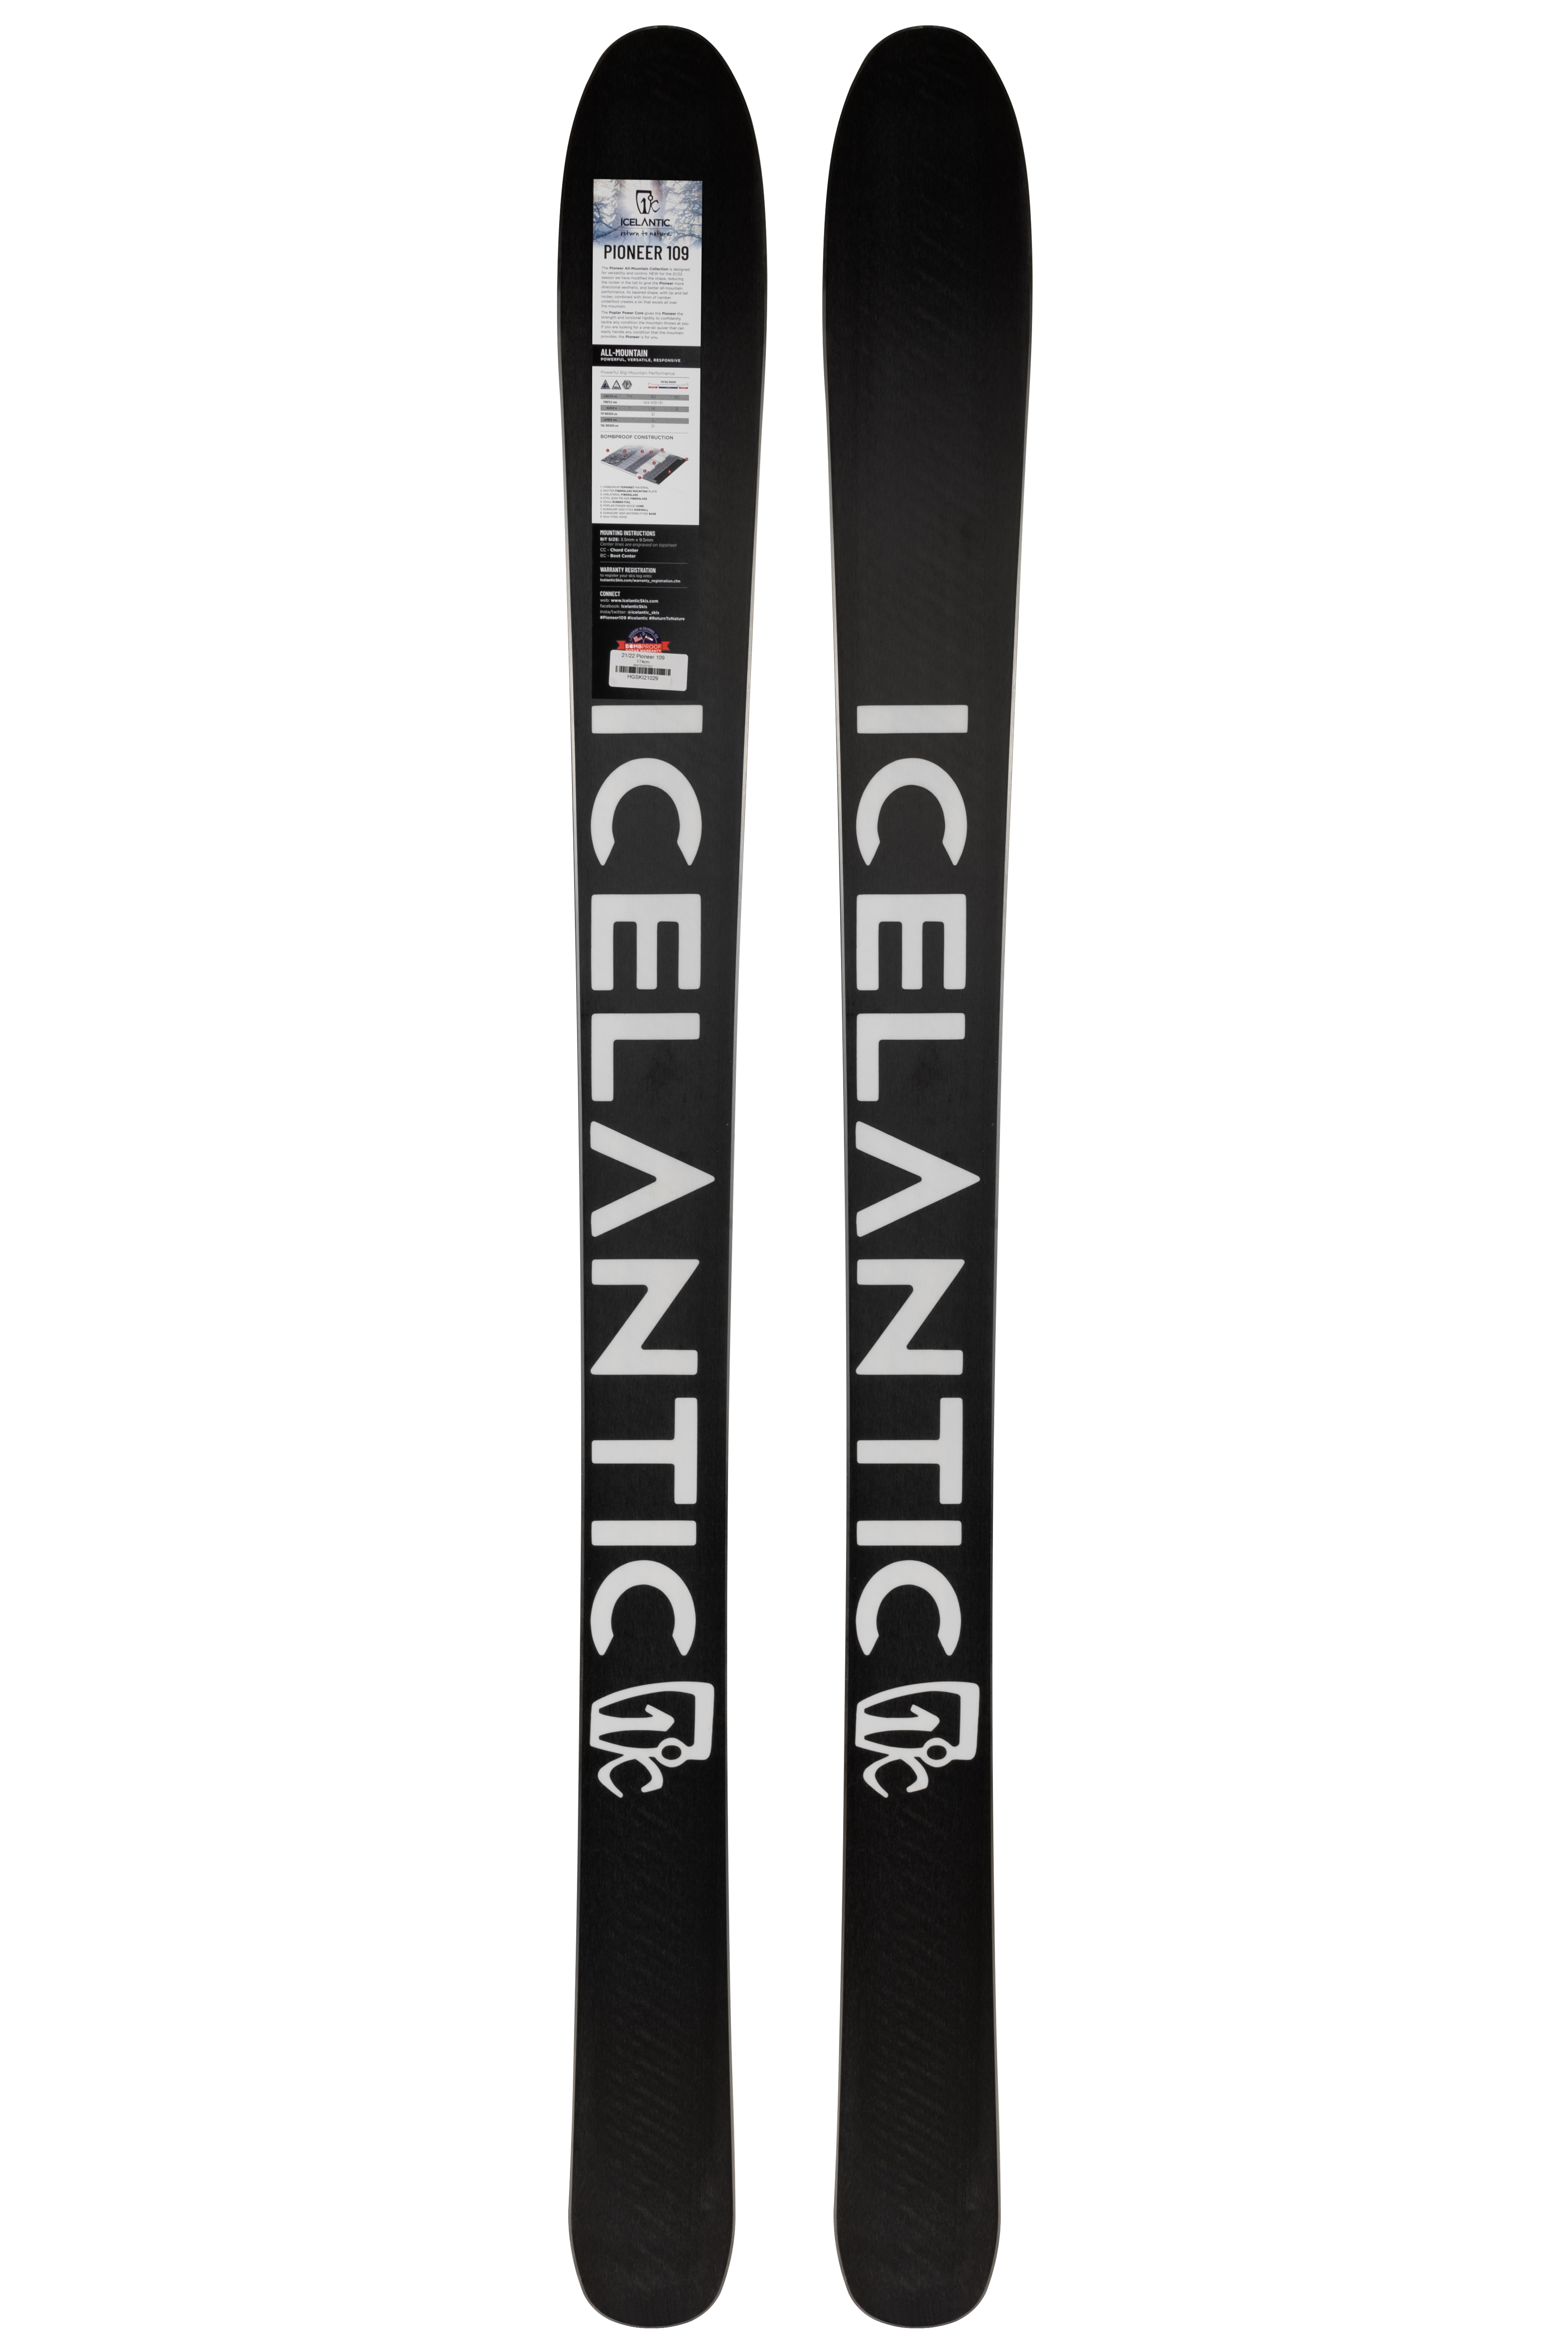 в продаже Лыжи Icelantic Pioneer 109 2021/2022 174cm - фото 3